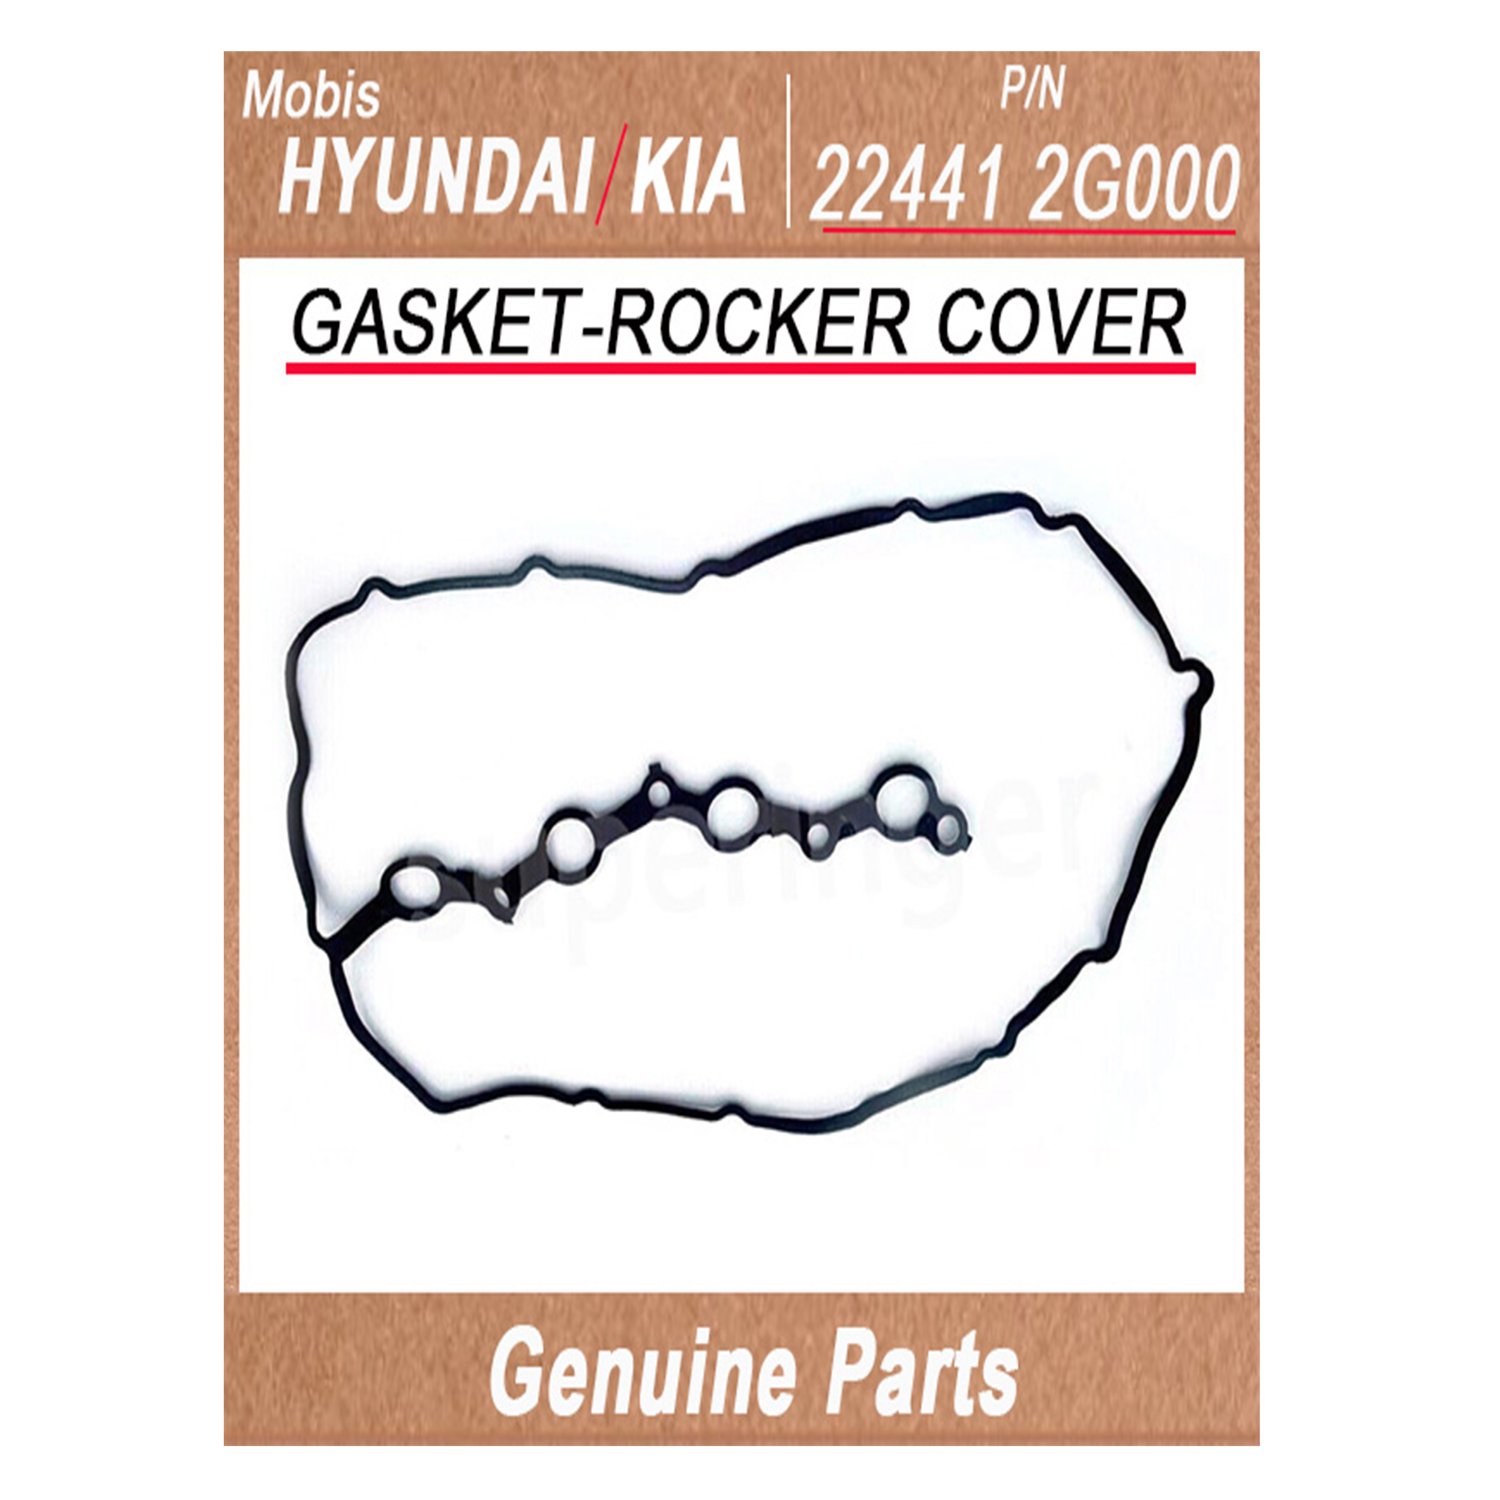 224412G000 _ GASKET_ROCKER COVER _ Genuine Korean Automotive Spare Parts _ Hyundai Kia _Mobis_